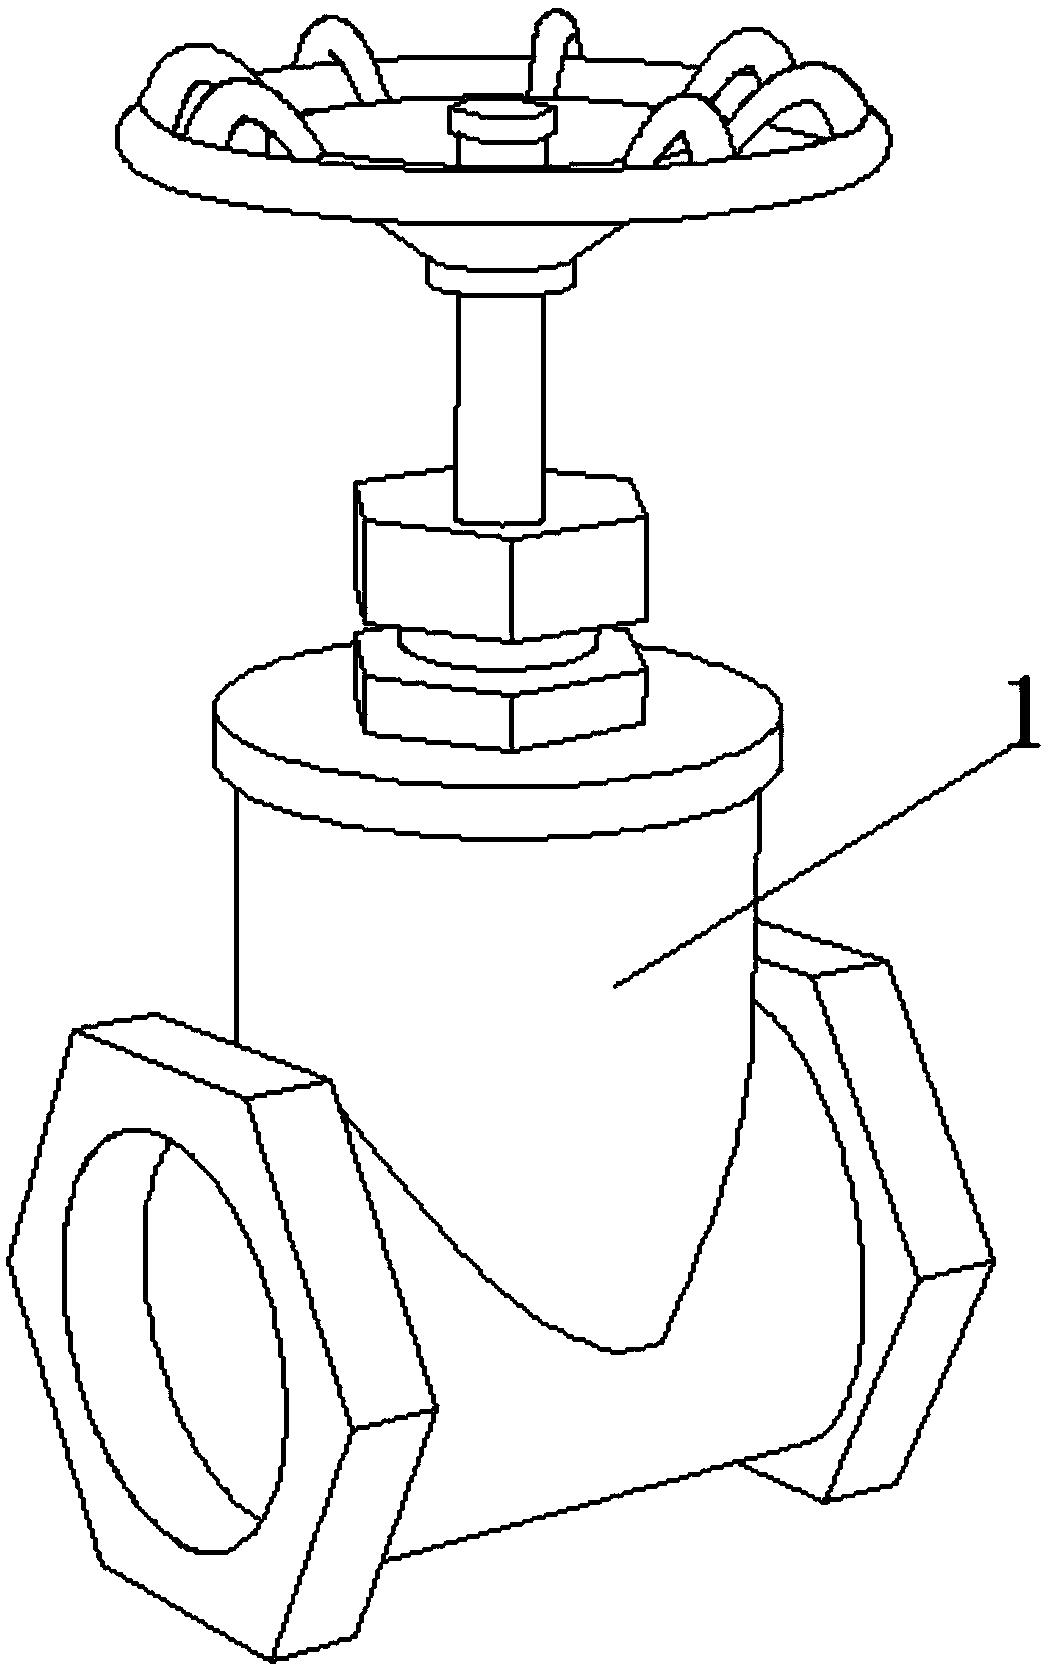 Anticorrosion coating for manual threaded valve